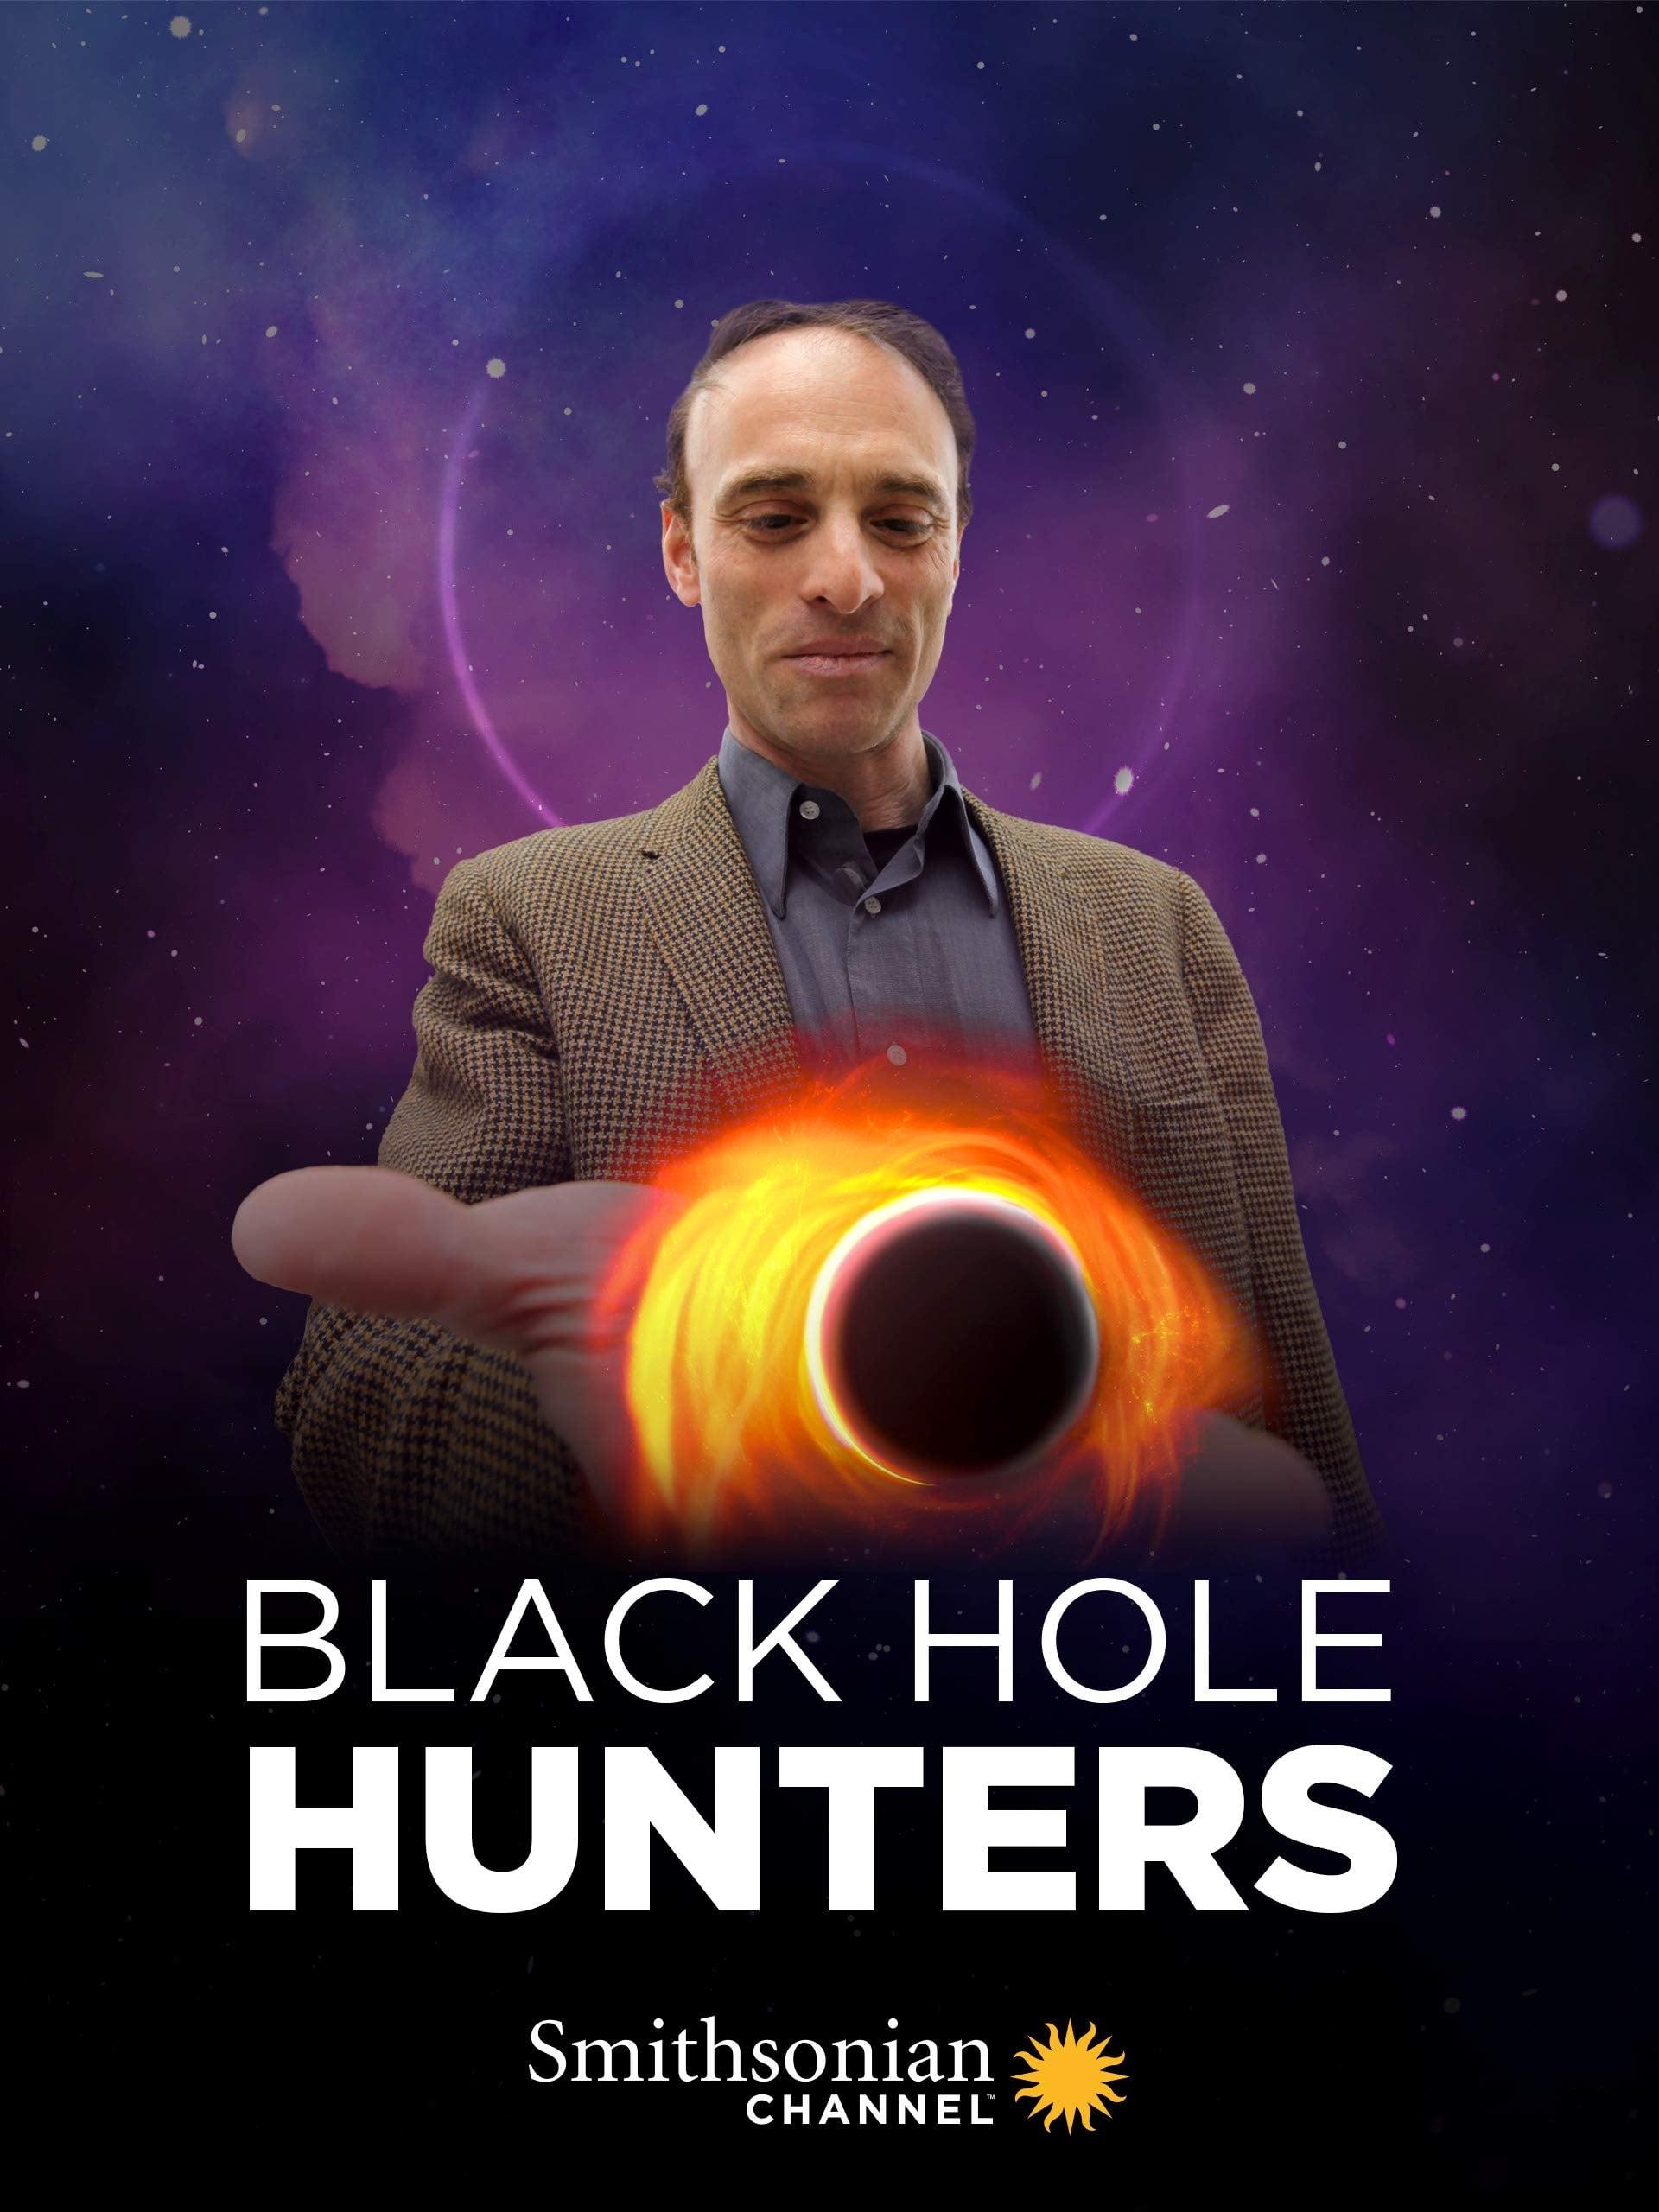 Black Hole Hunters poster